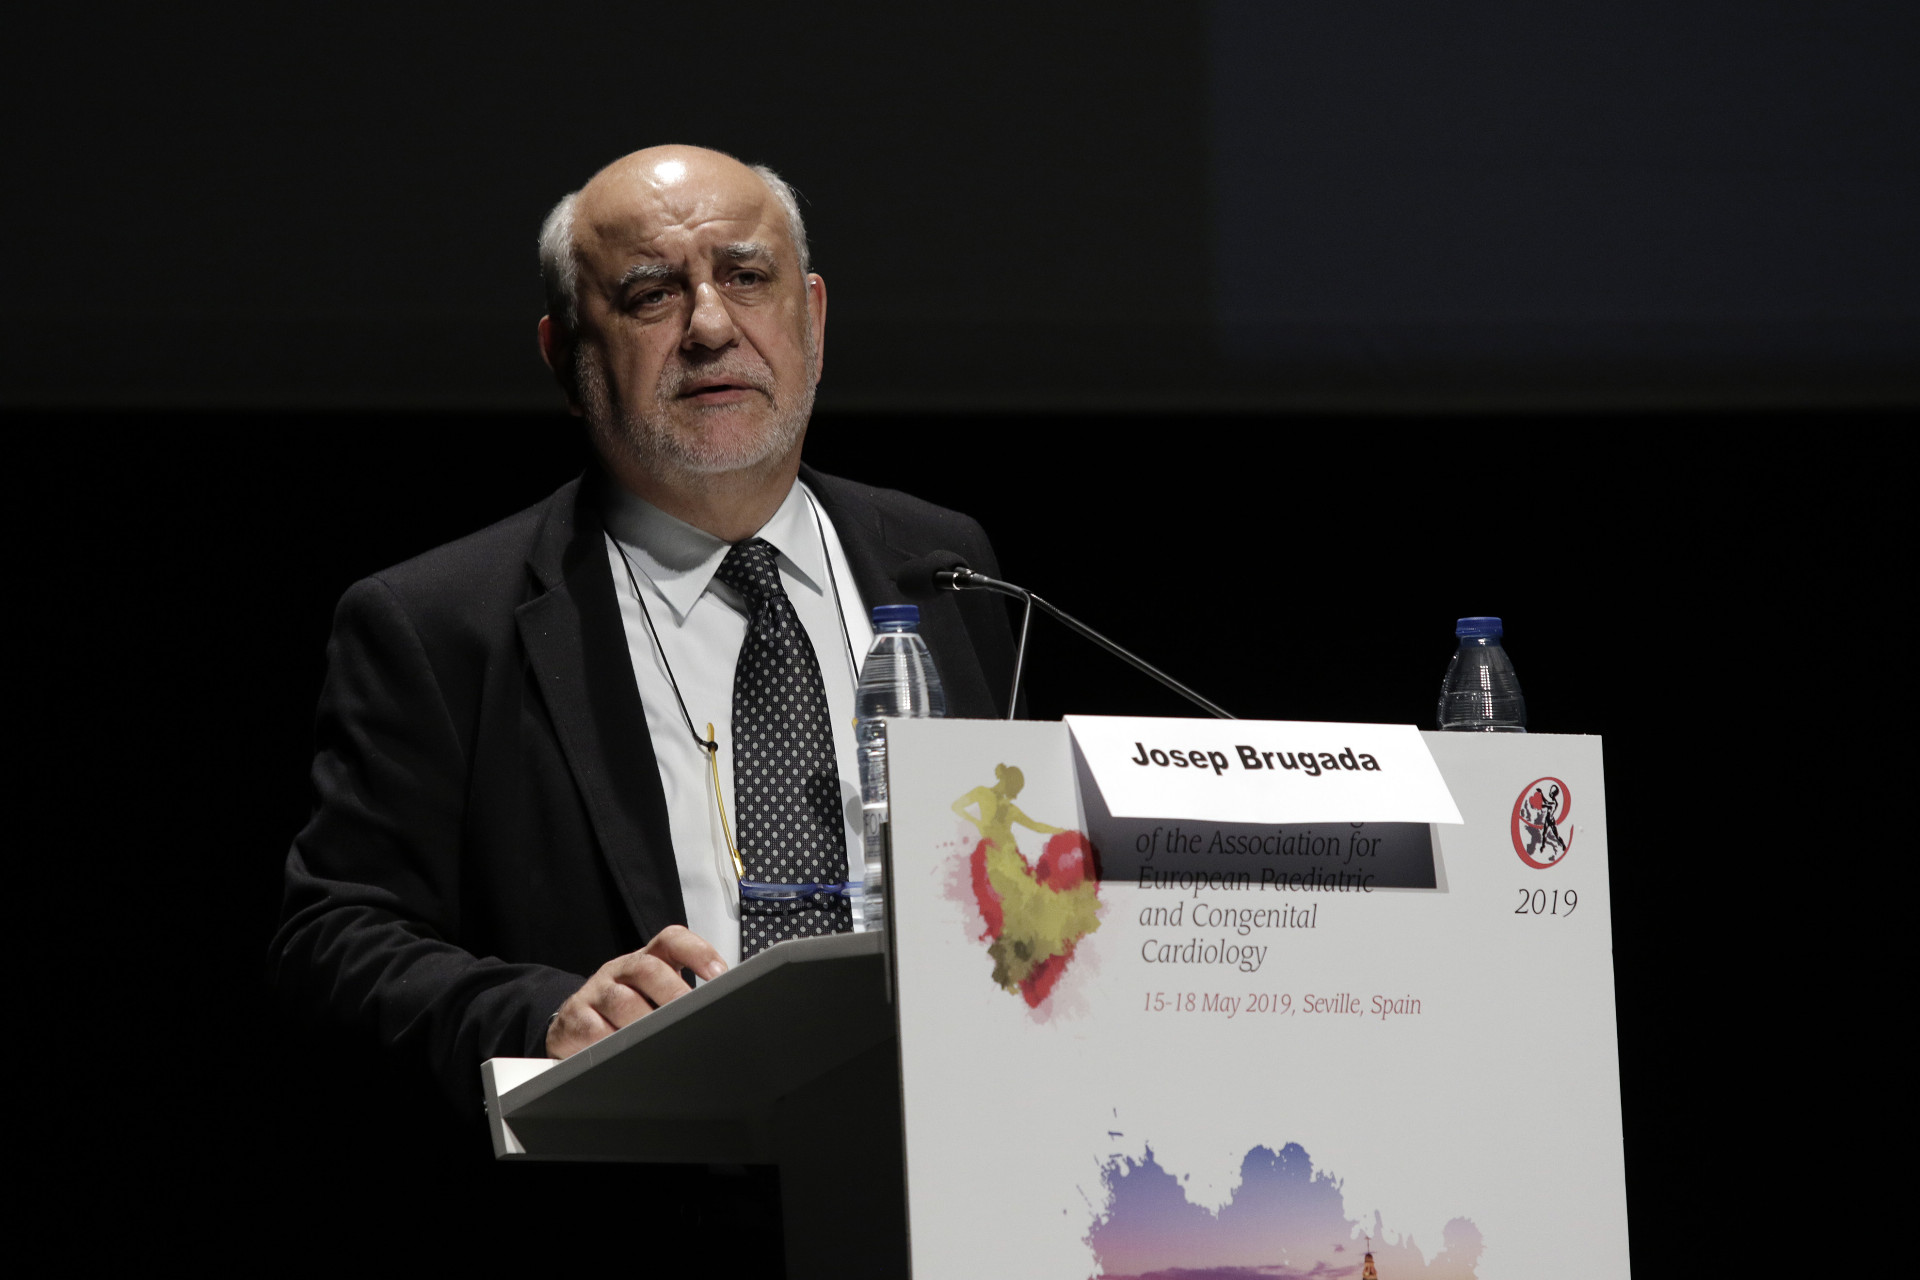 Mannheimer Lecture AEPC 2019: Josep Brugada